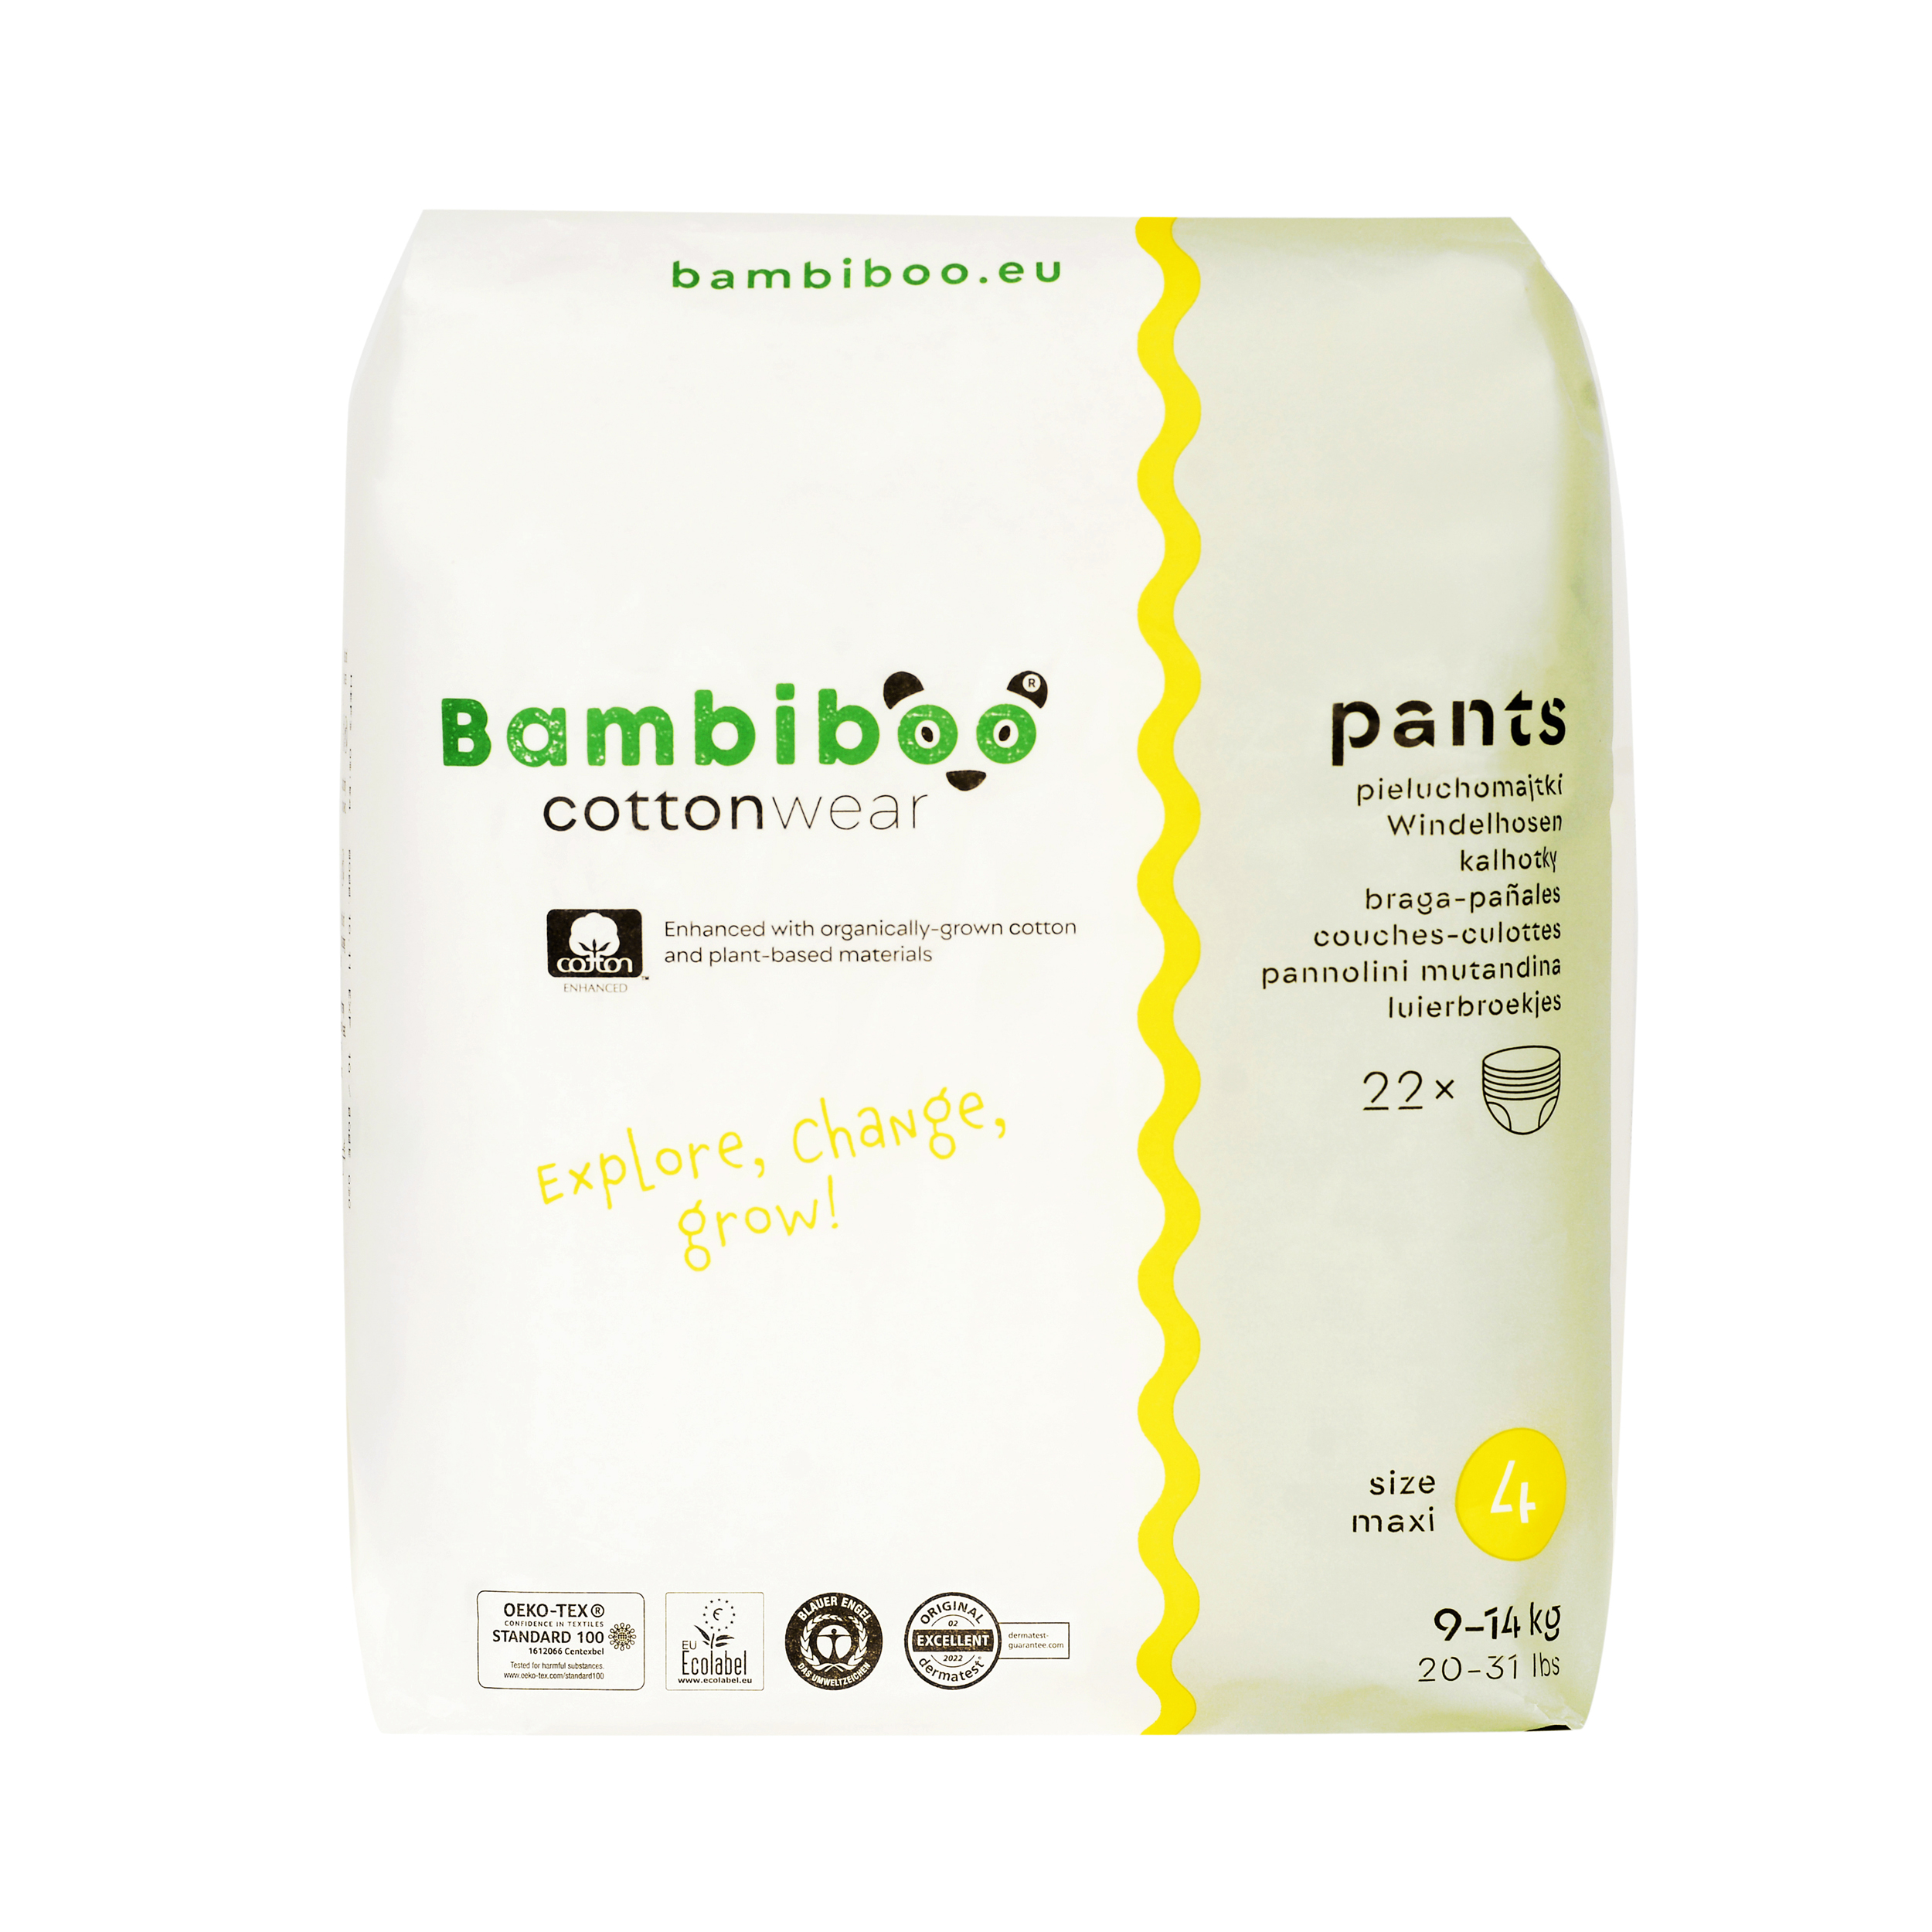 Bambiboo plenky PANTS Velikost 4. (22 ks)